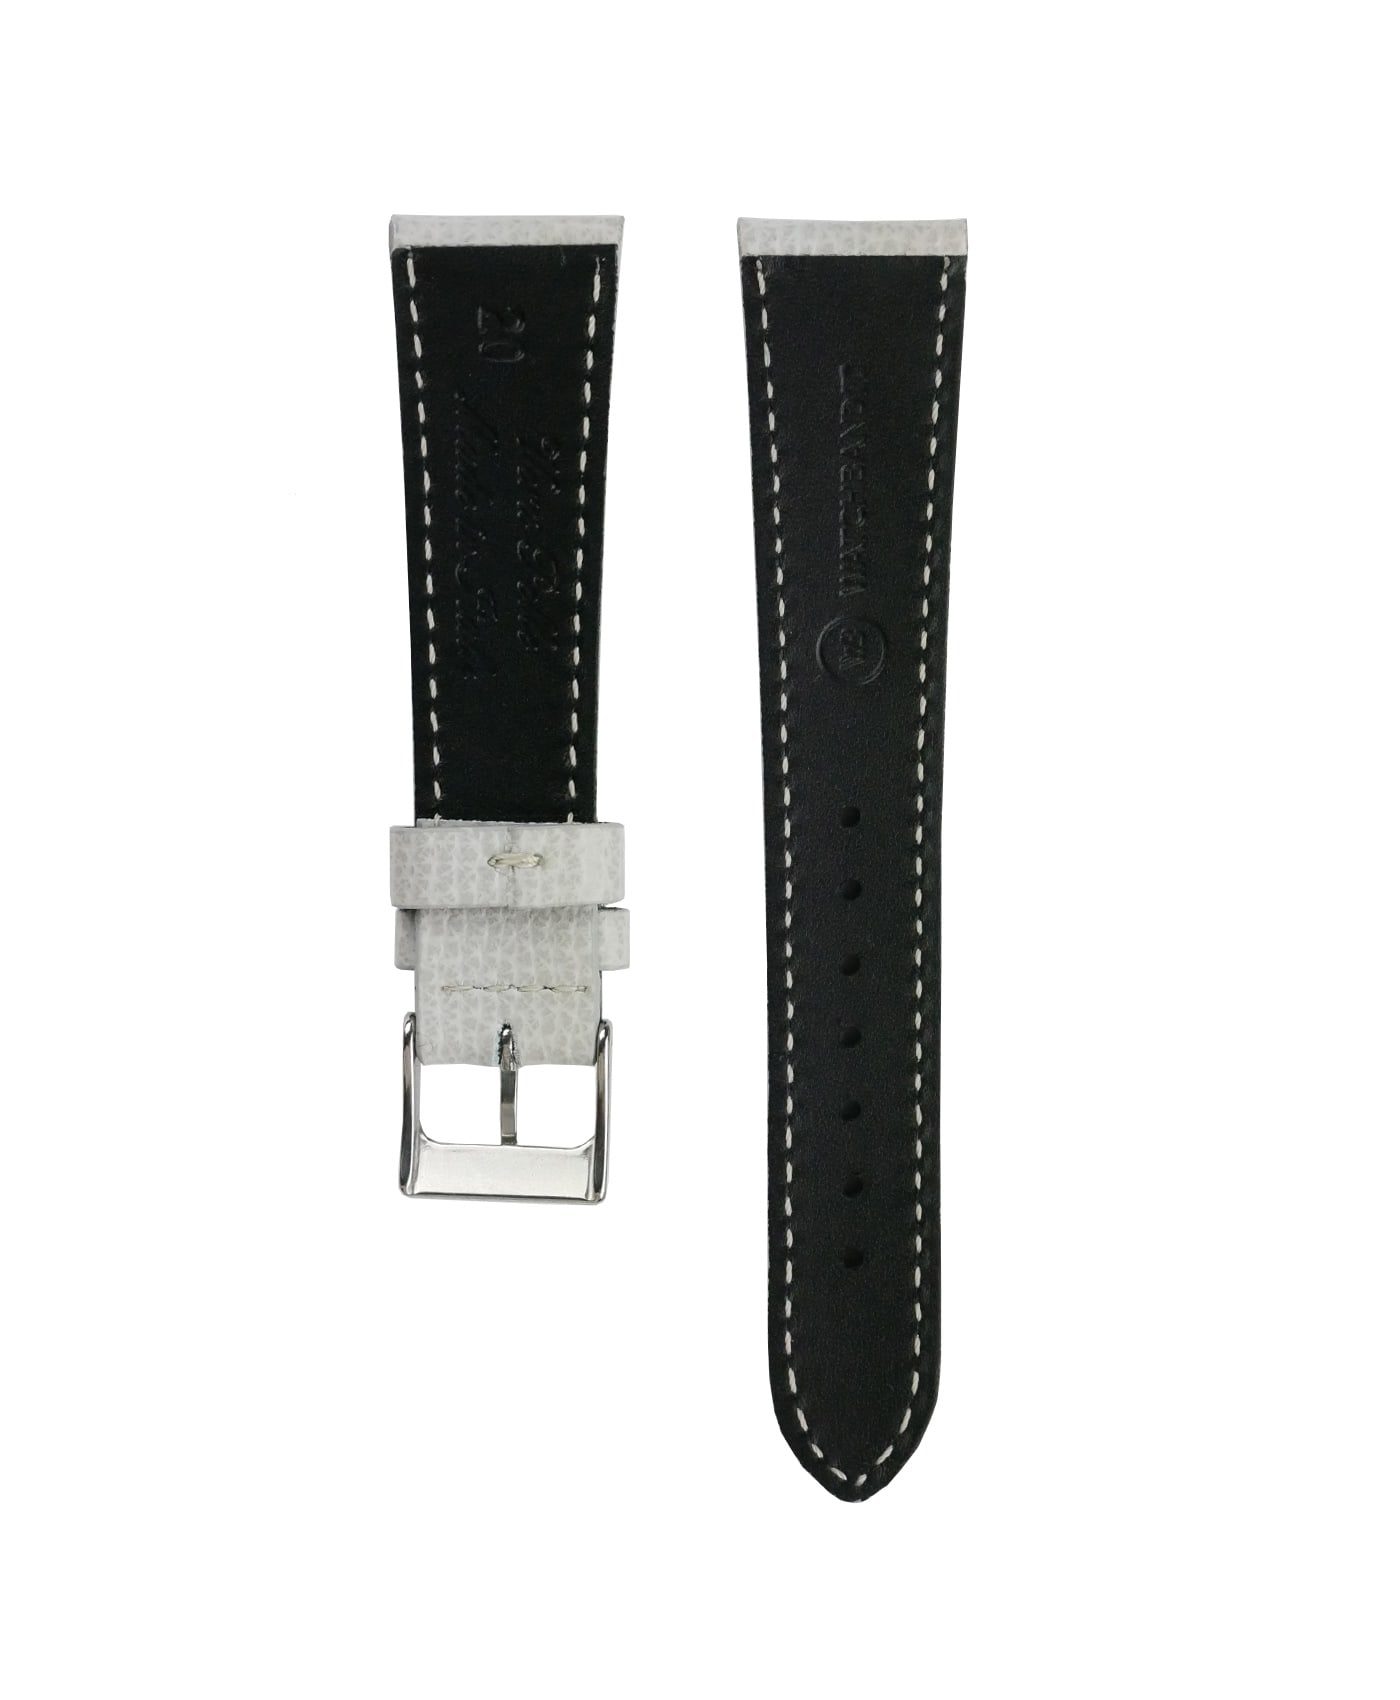 Textured calfskin leather watch strap light grey back watchbandit